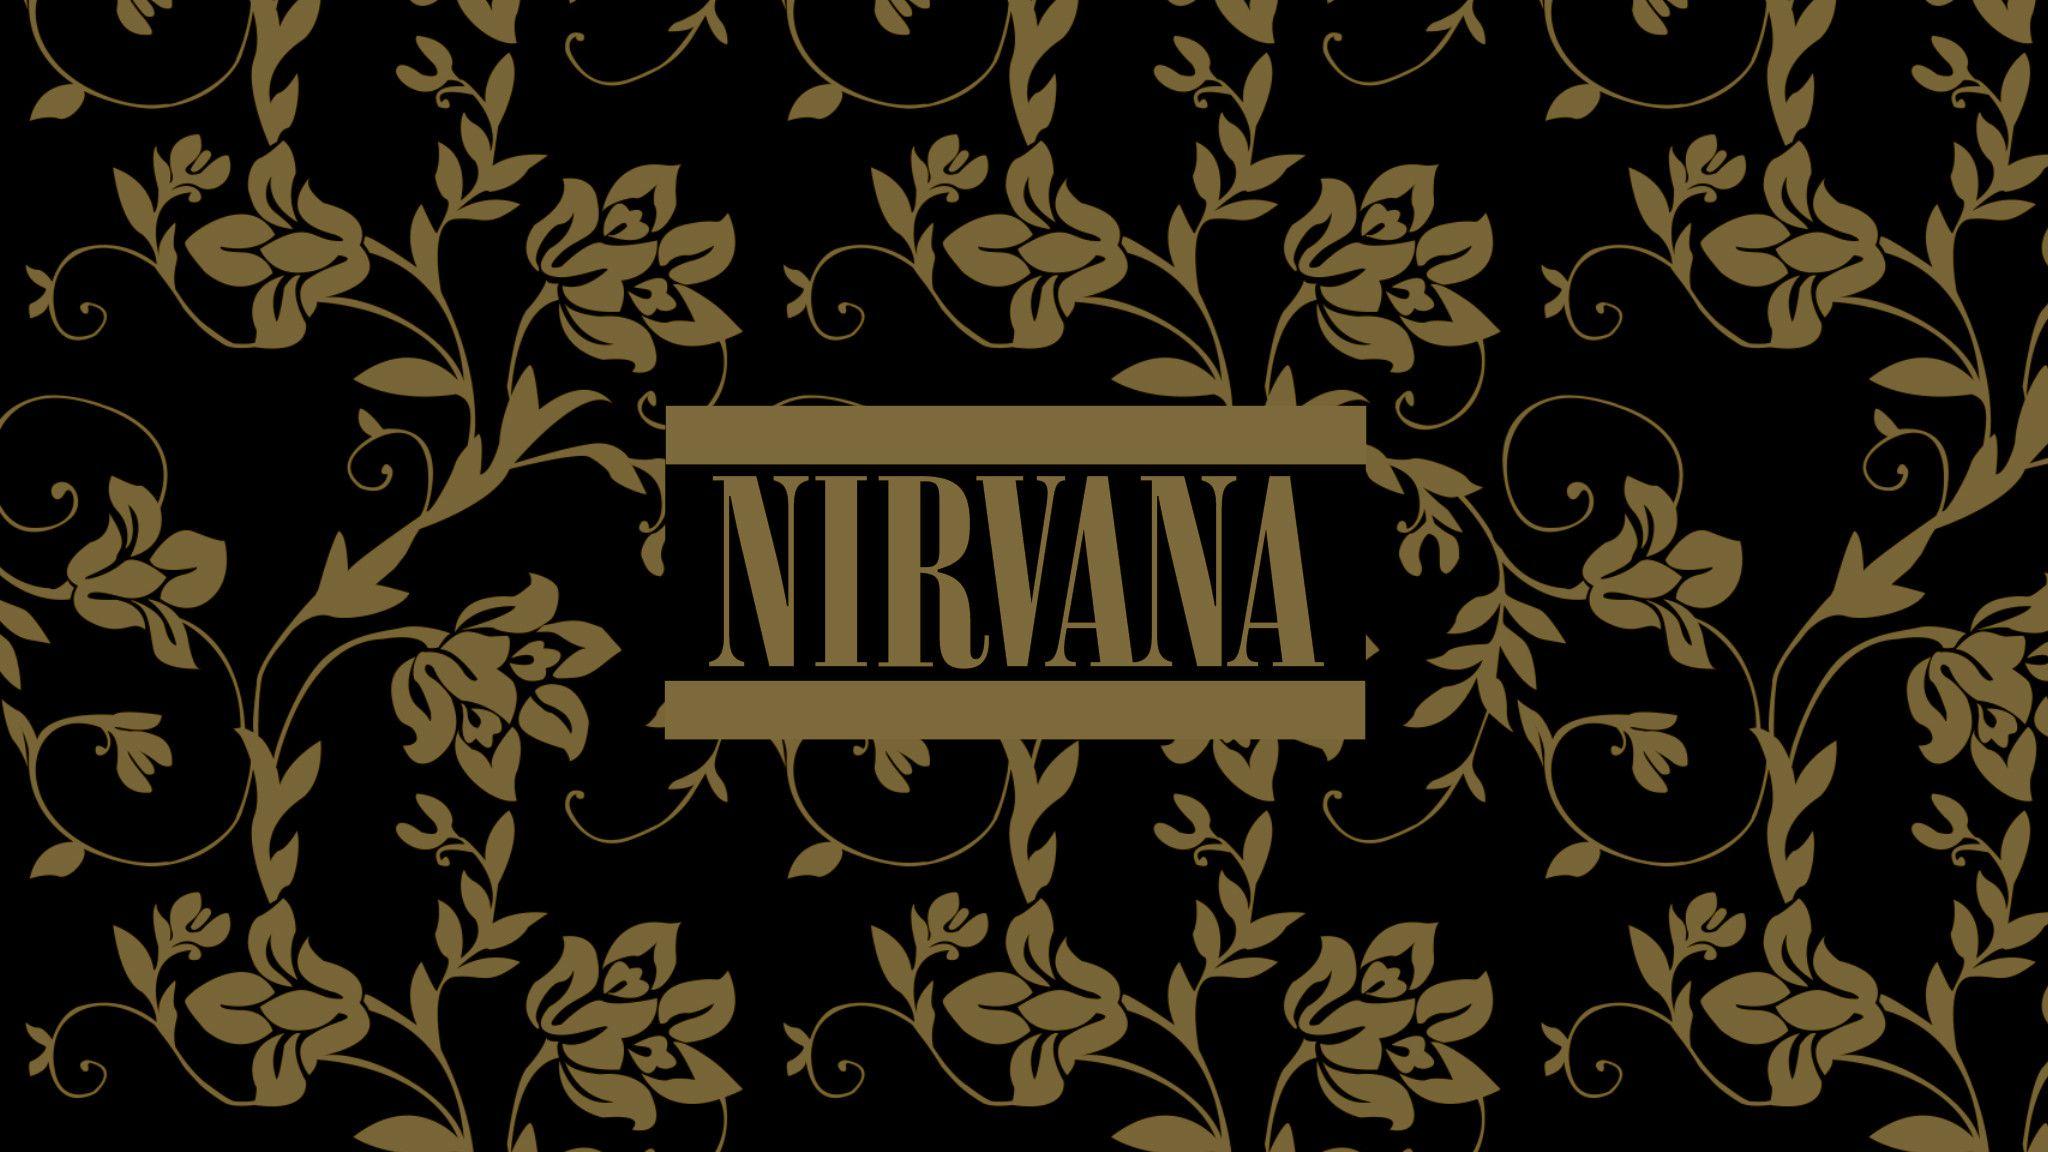 Nirvana Logo Hd Wallpapers